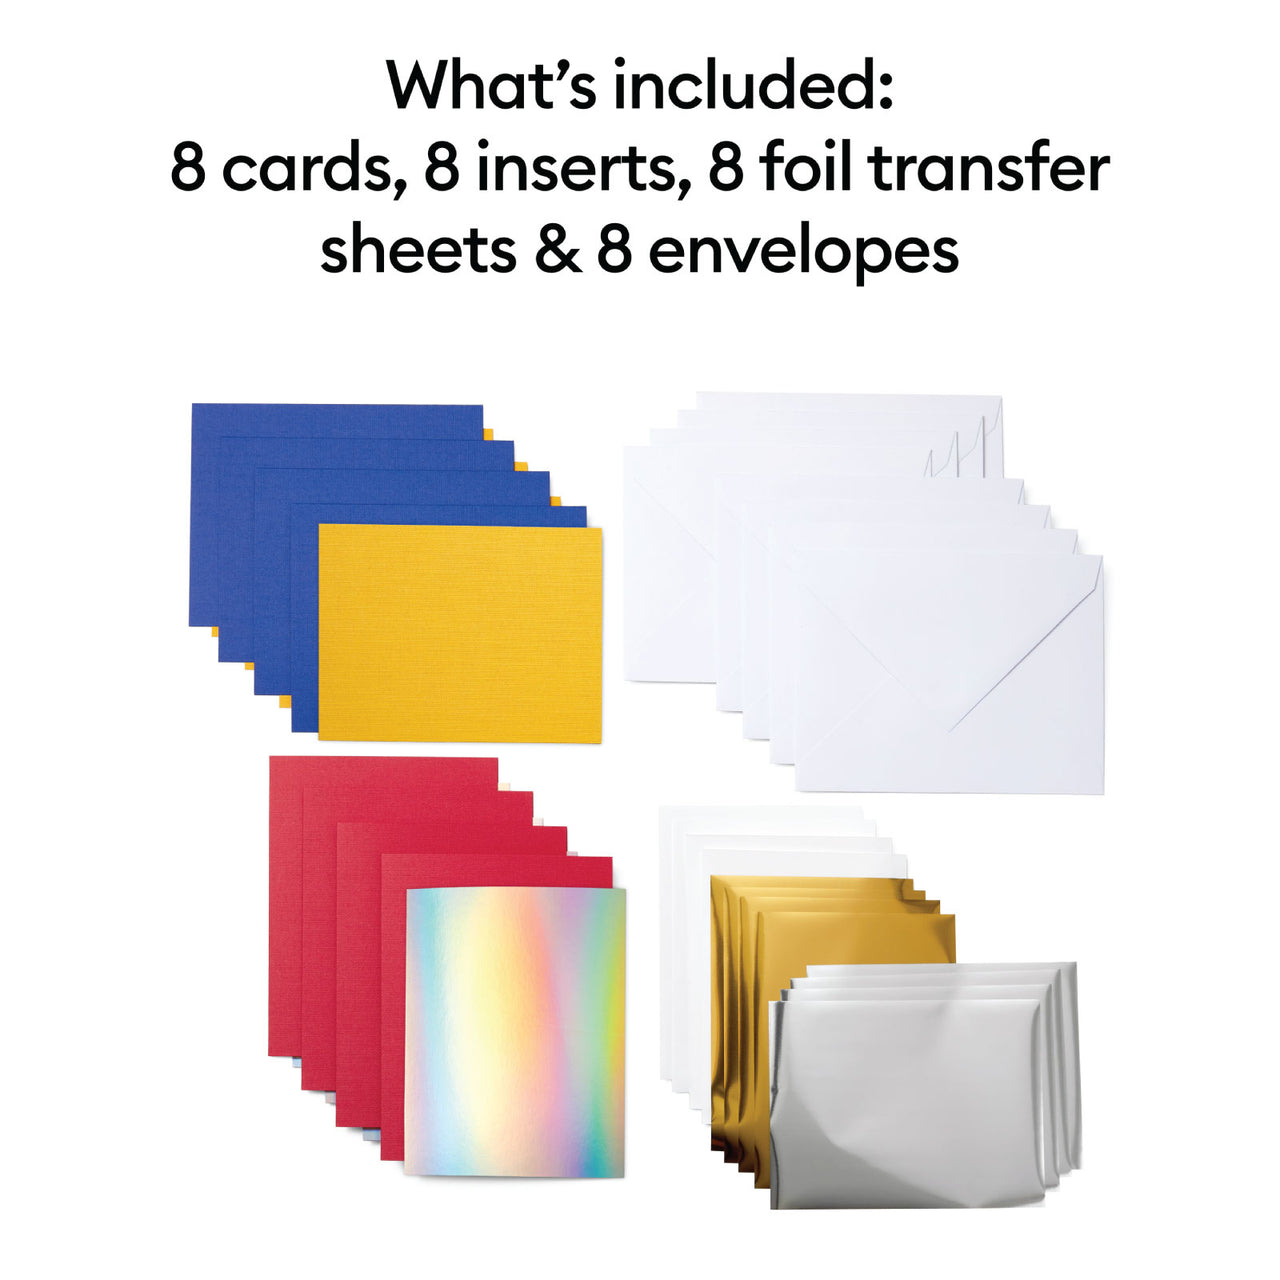 Cricut Joy Foil Transfer Insert Cards Celebration Sampler A2 | 8 Count